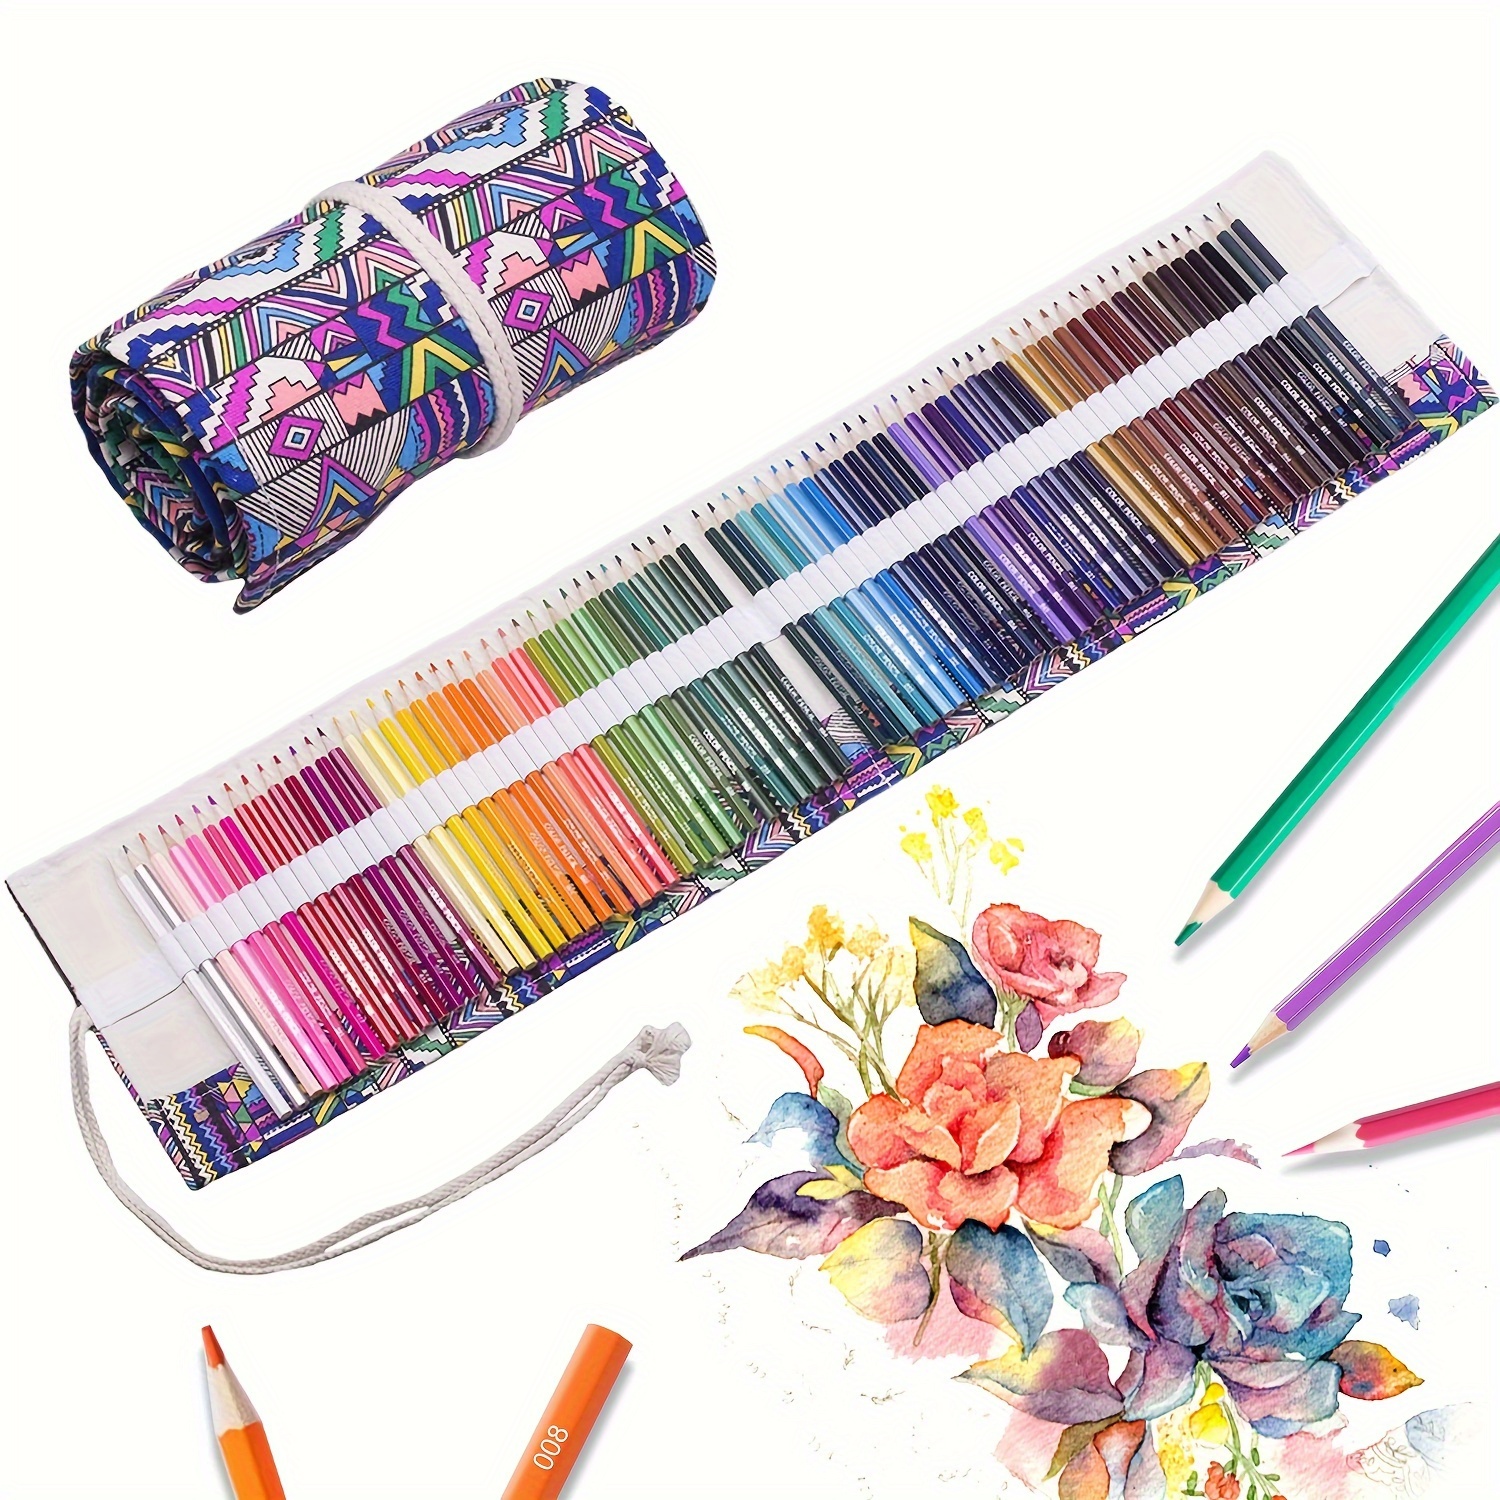 520 Colors Pencils - Multi-color Pencils Art Pencils Set For